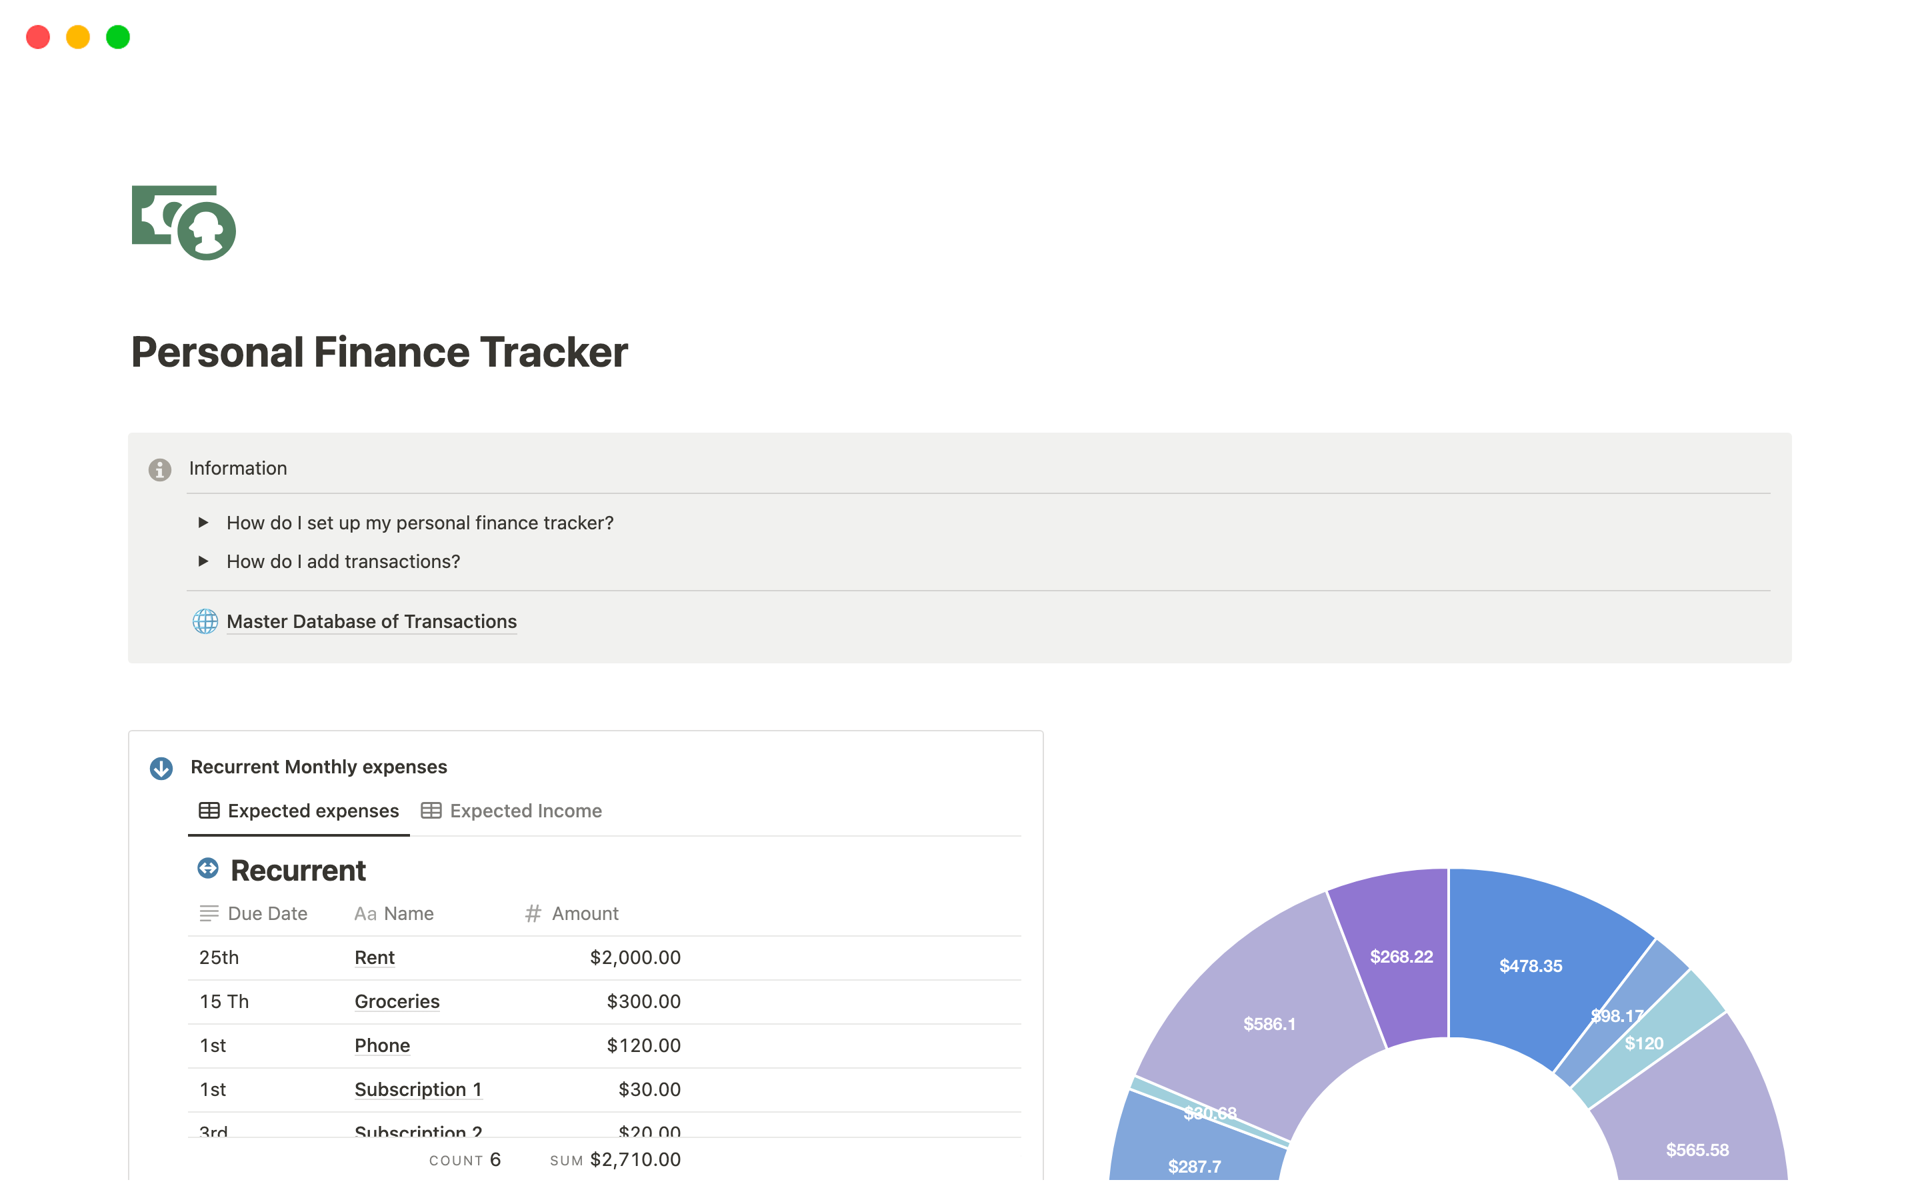 Vista previa de una plantilla para Personal Finance Tracker 